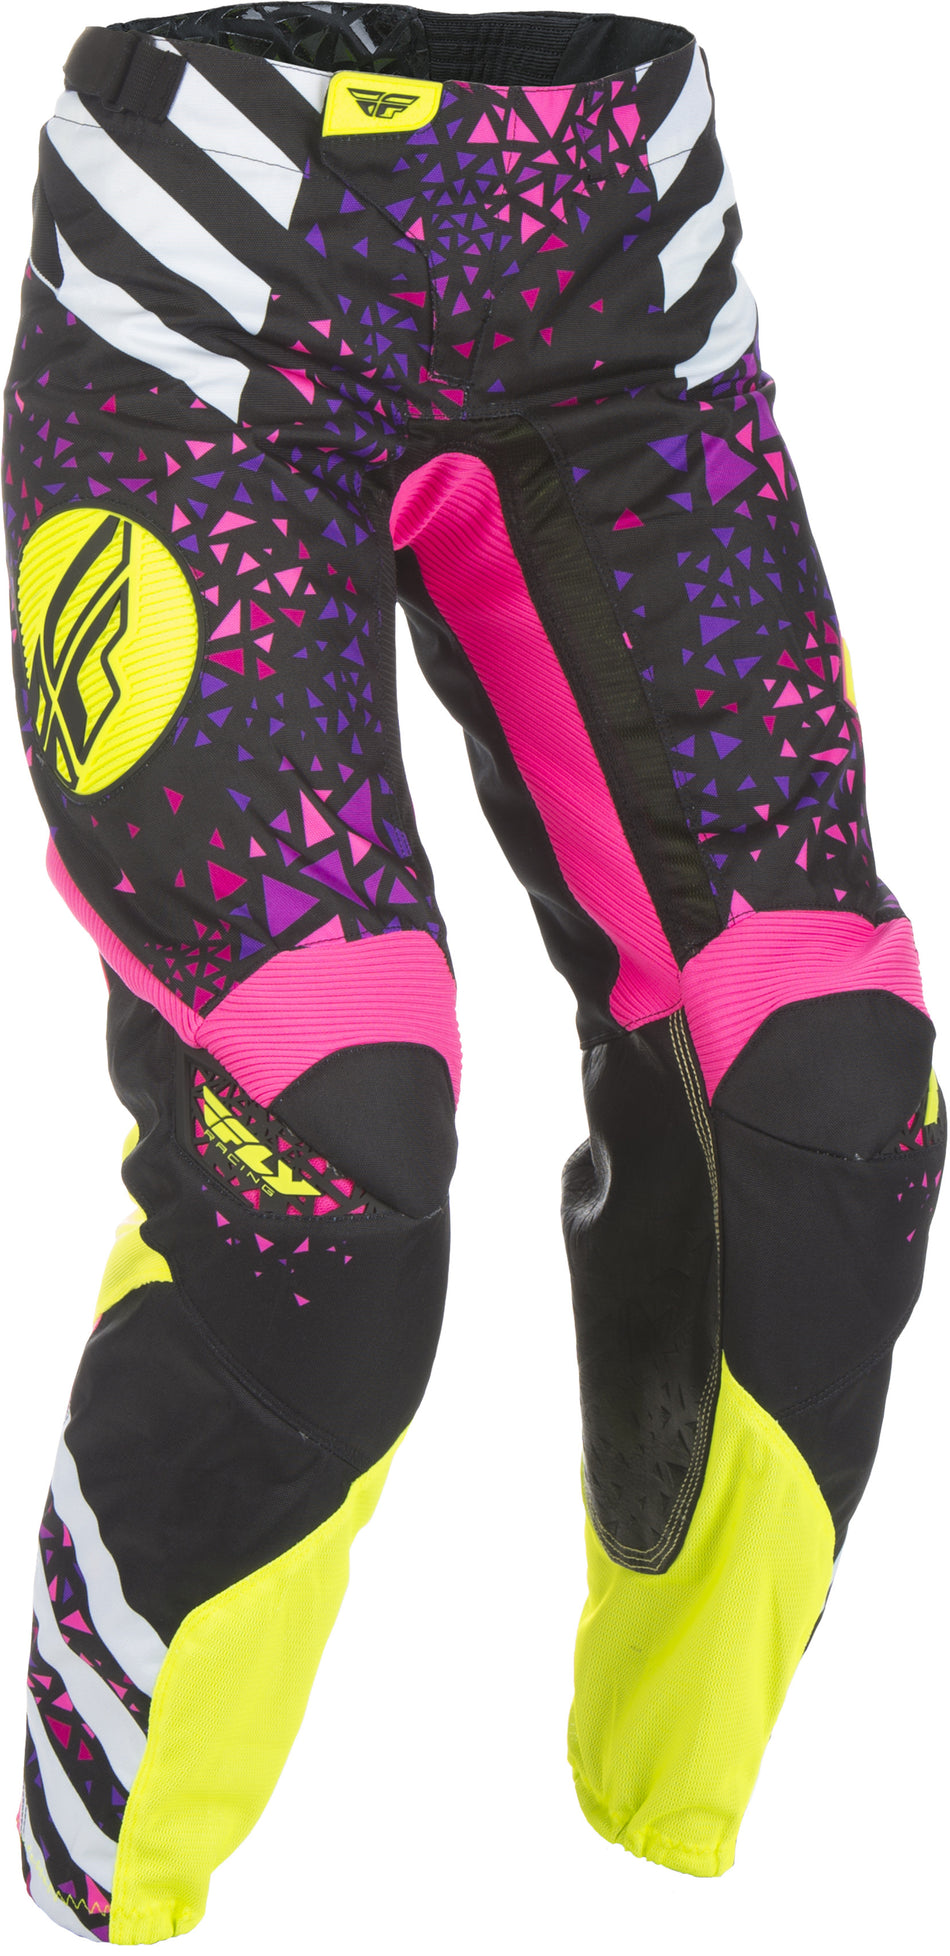 FLY RACING Kinetic Women's Race Pants Neon/Pink/Hi-Vis Sz 13/14 371-63910